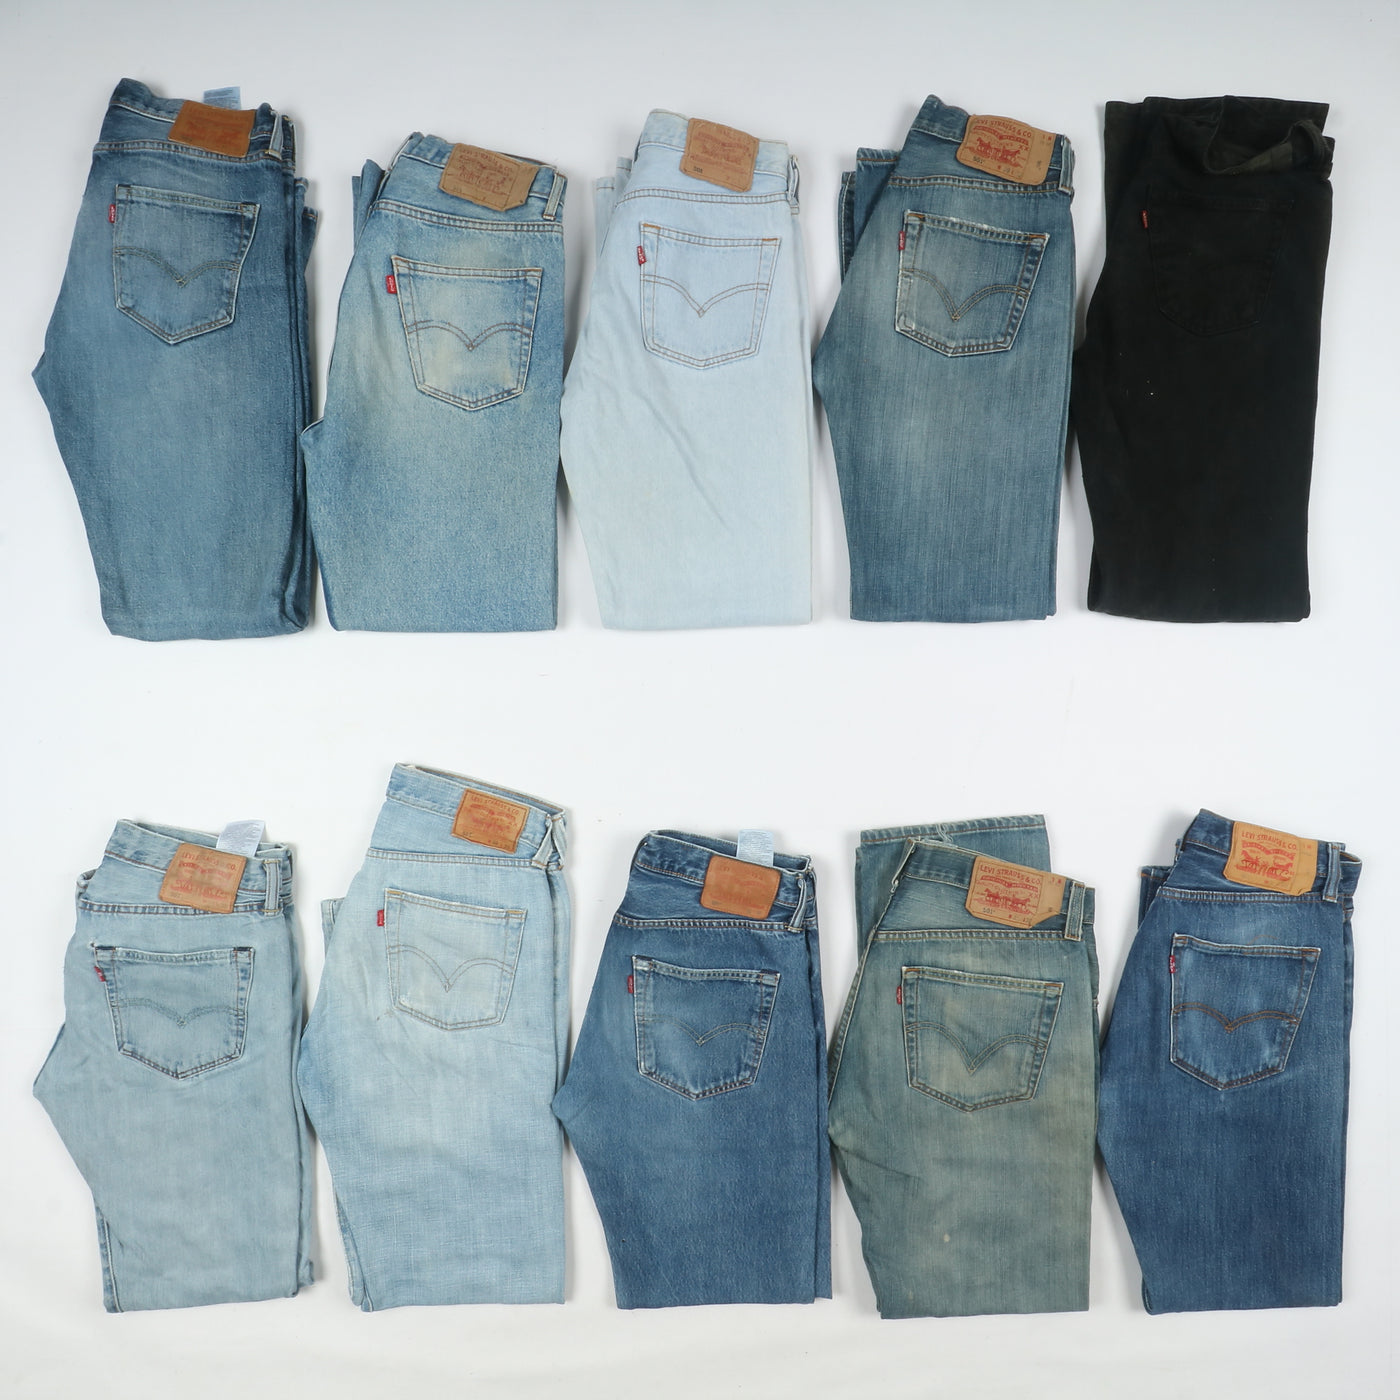 Levi's 501 jeans denim vintage Grado B stock da 77pz uomo - donna Levis